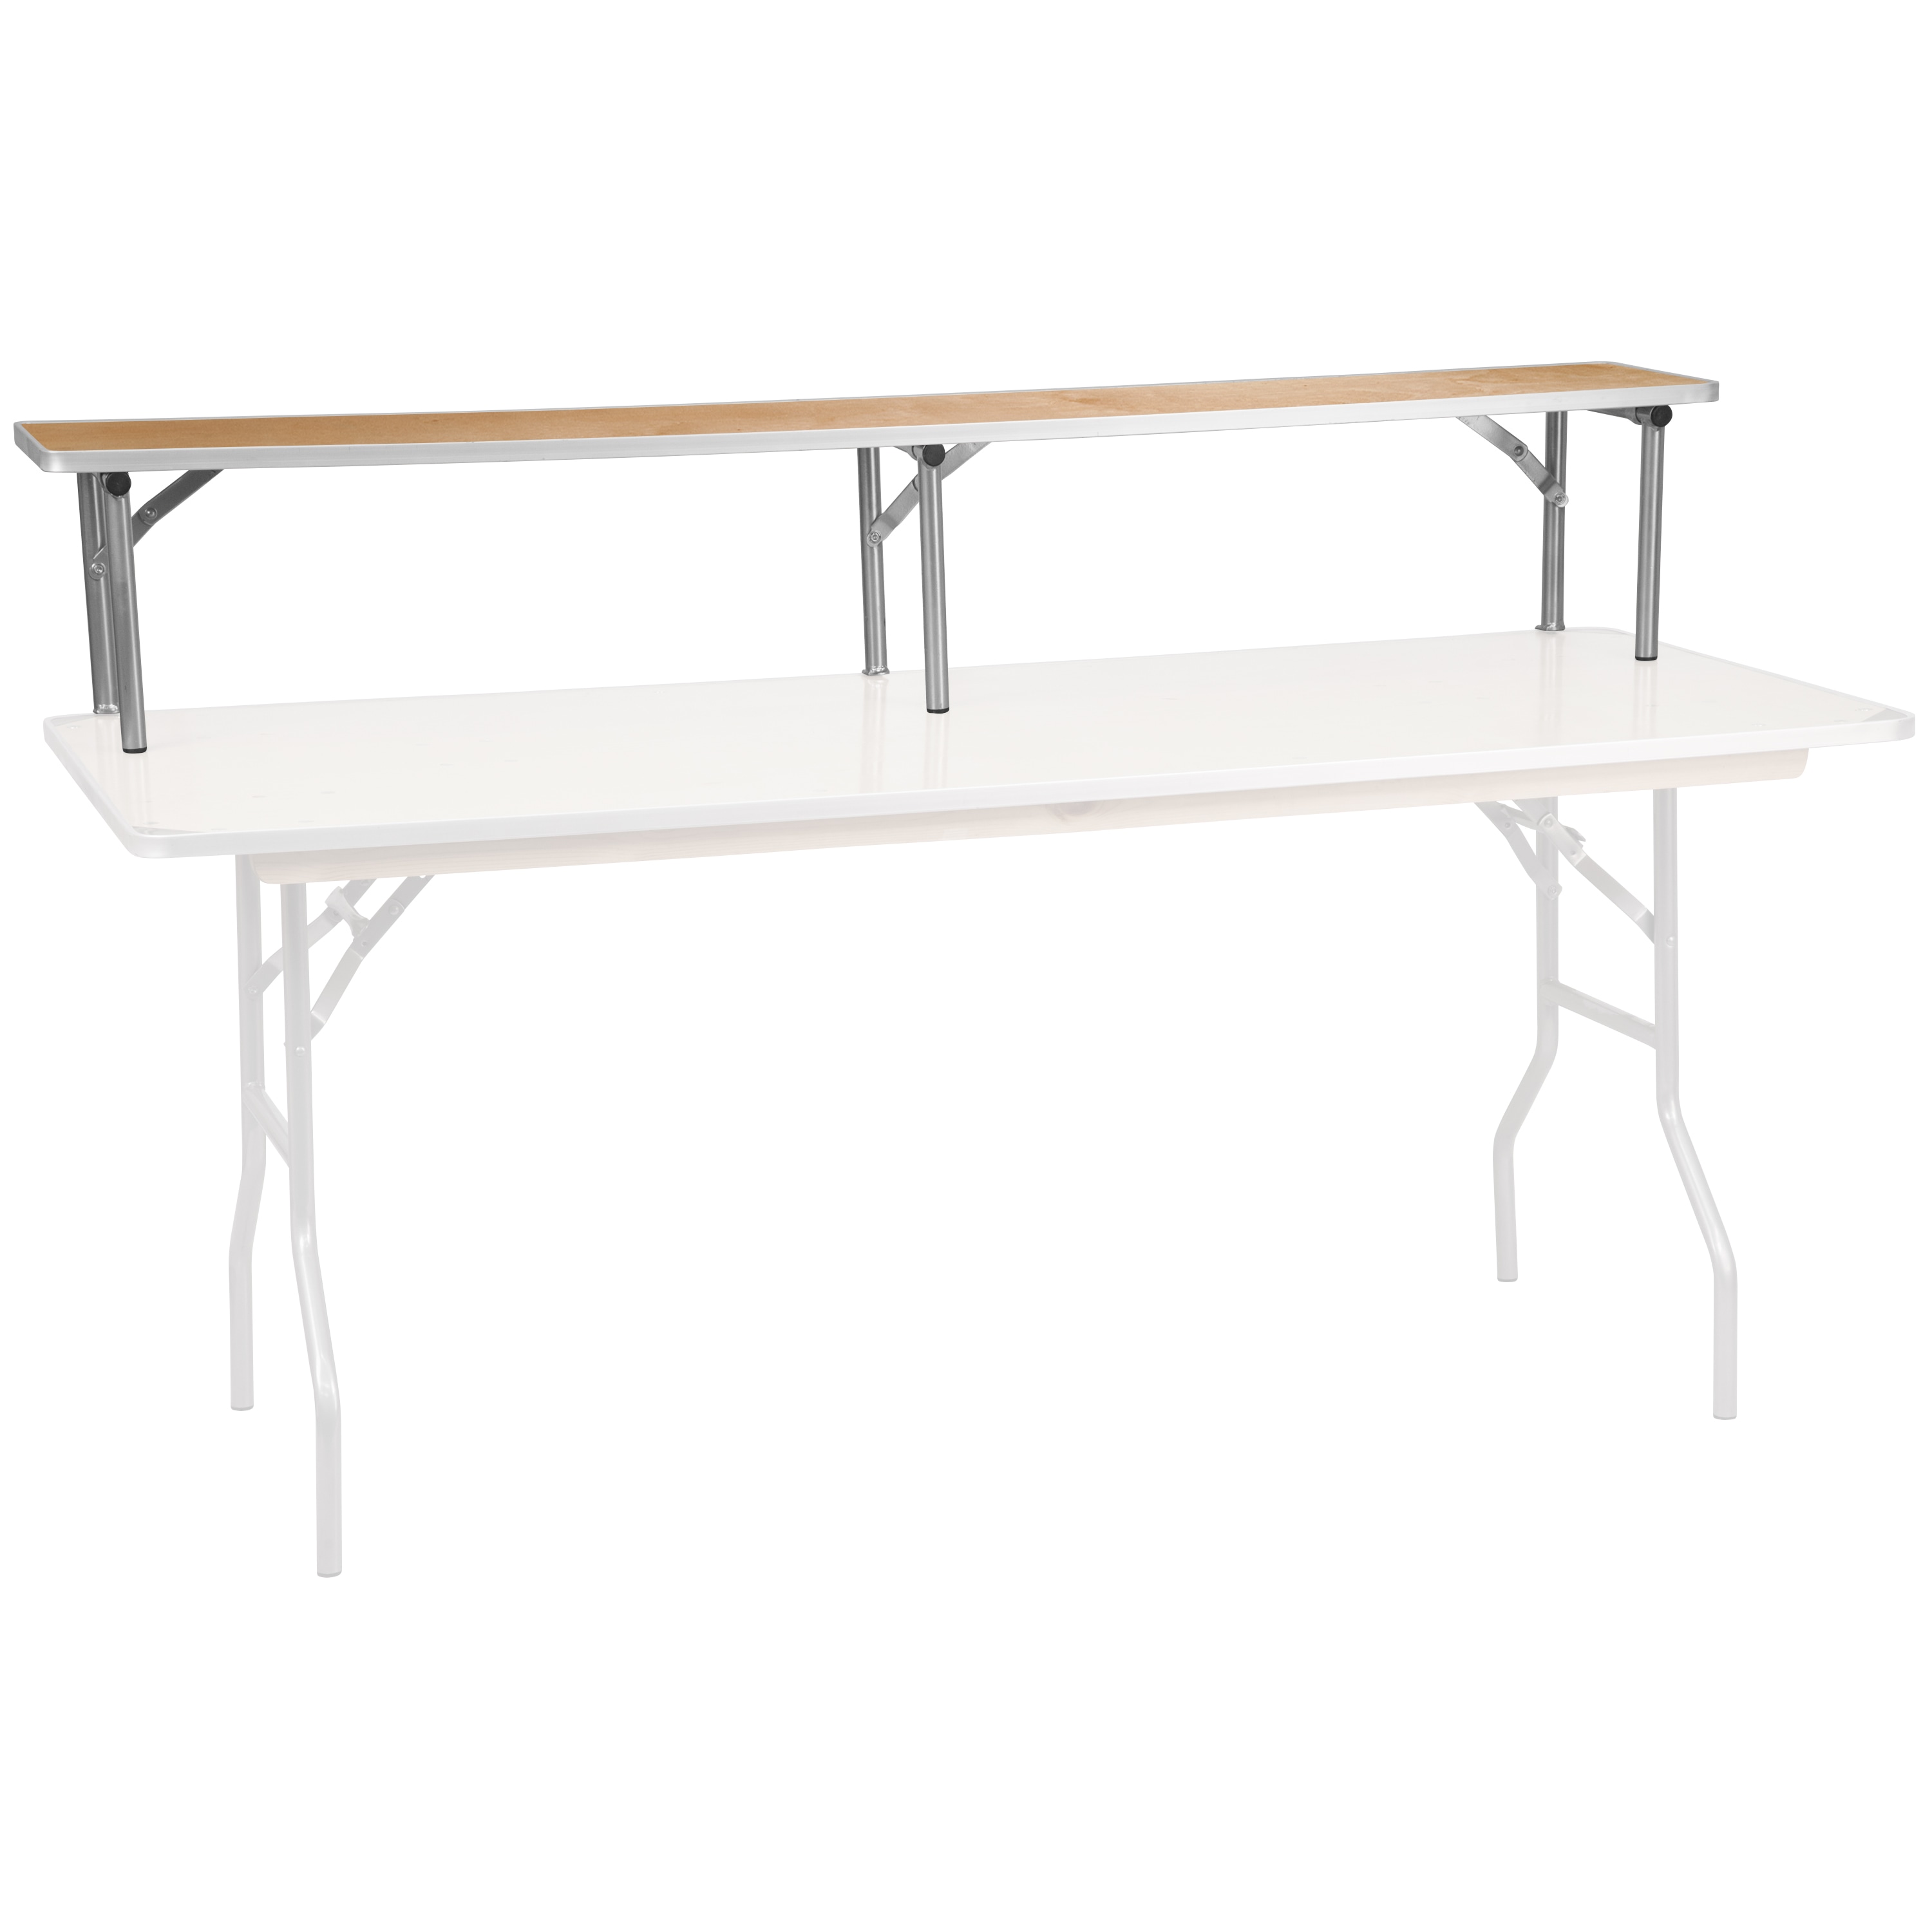 VS Rectangular Folding Table-3 Sizes 